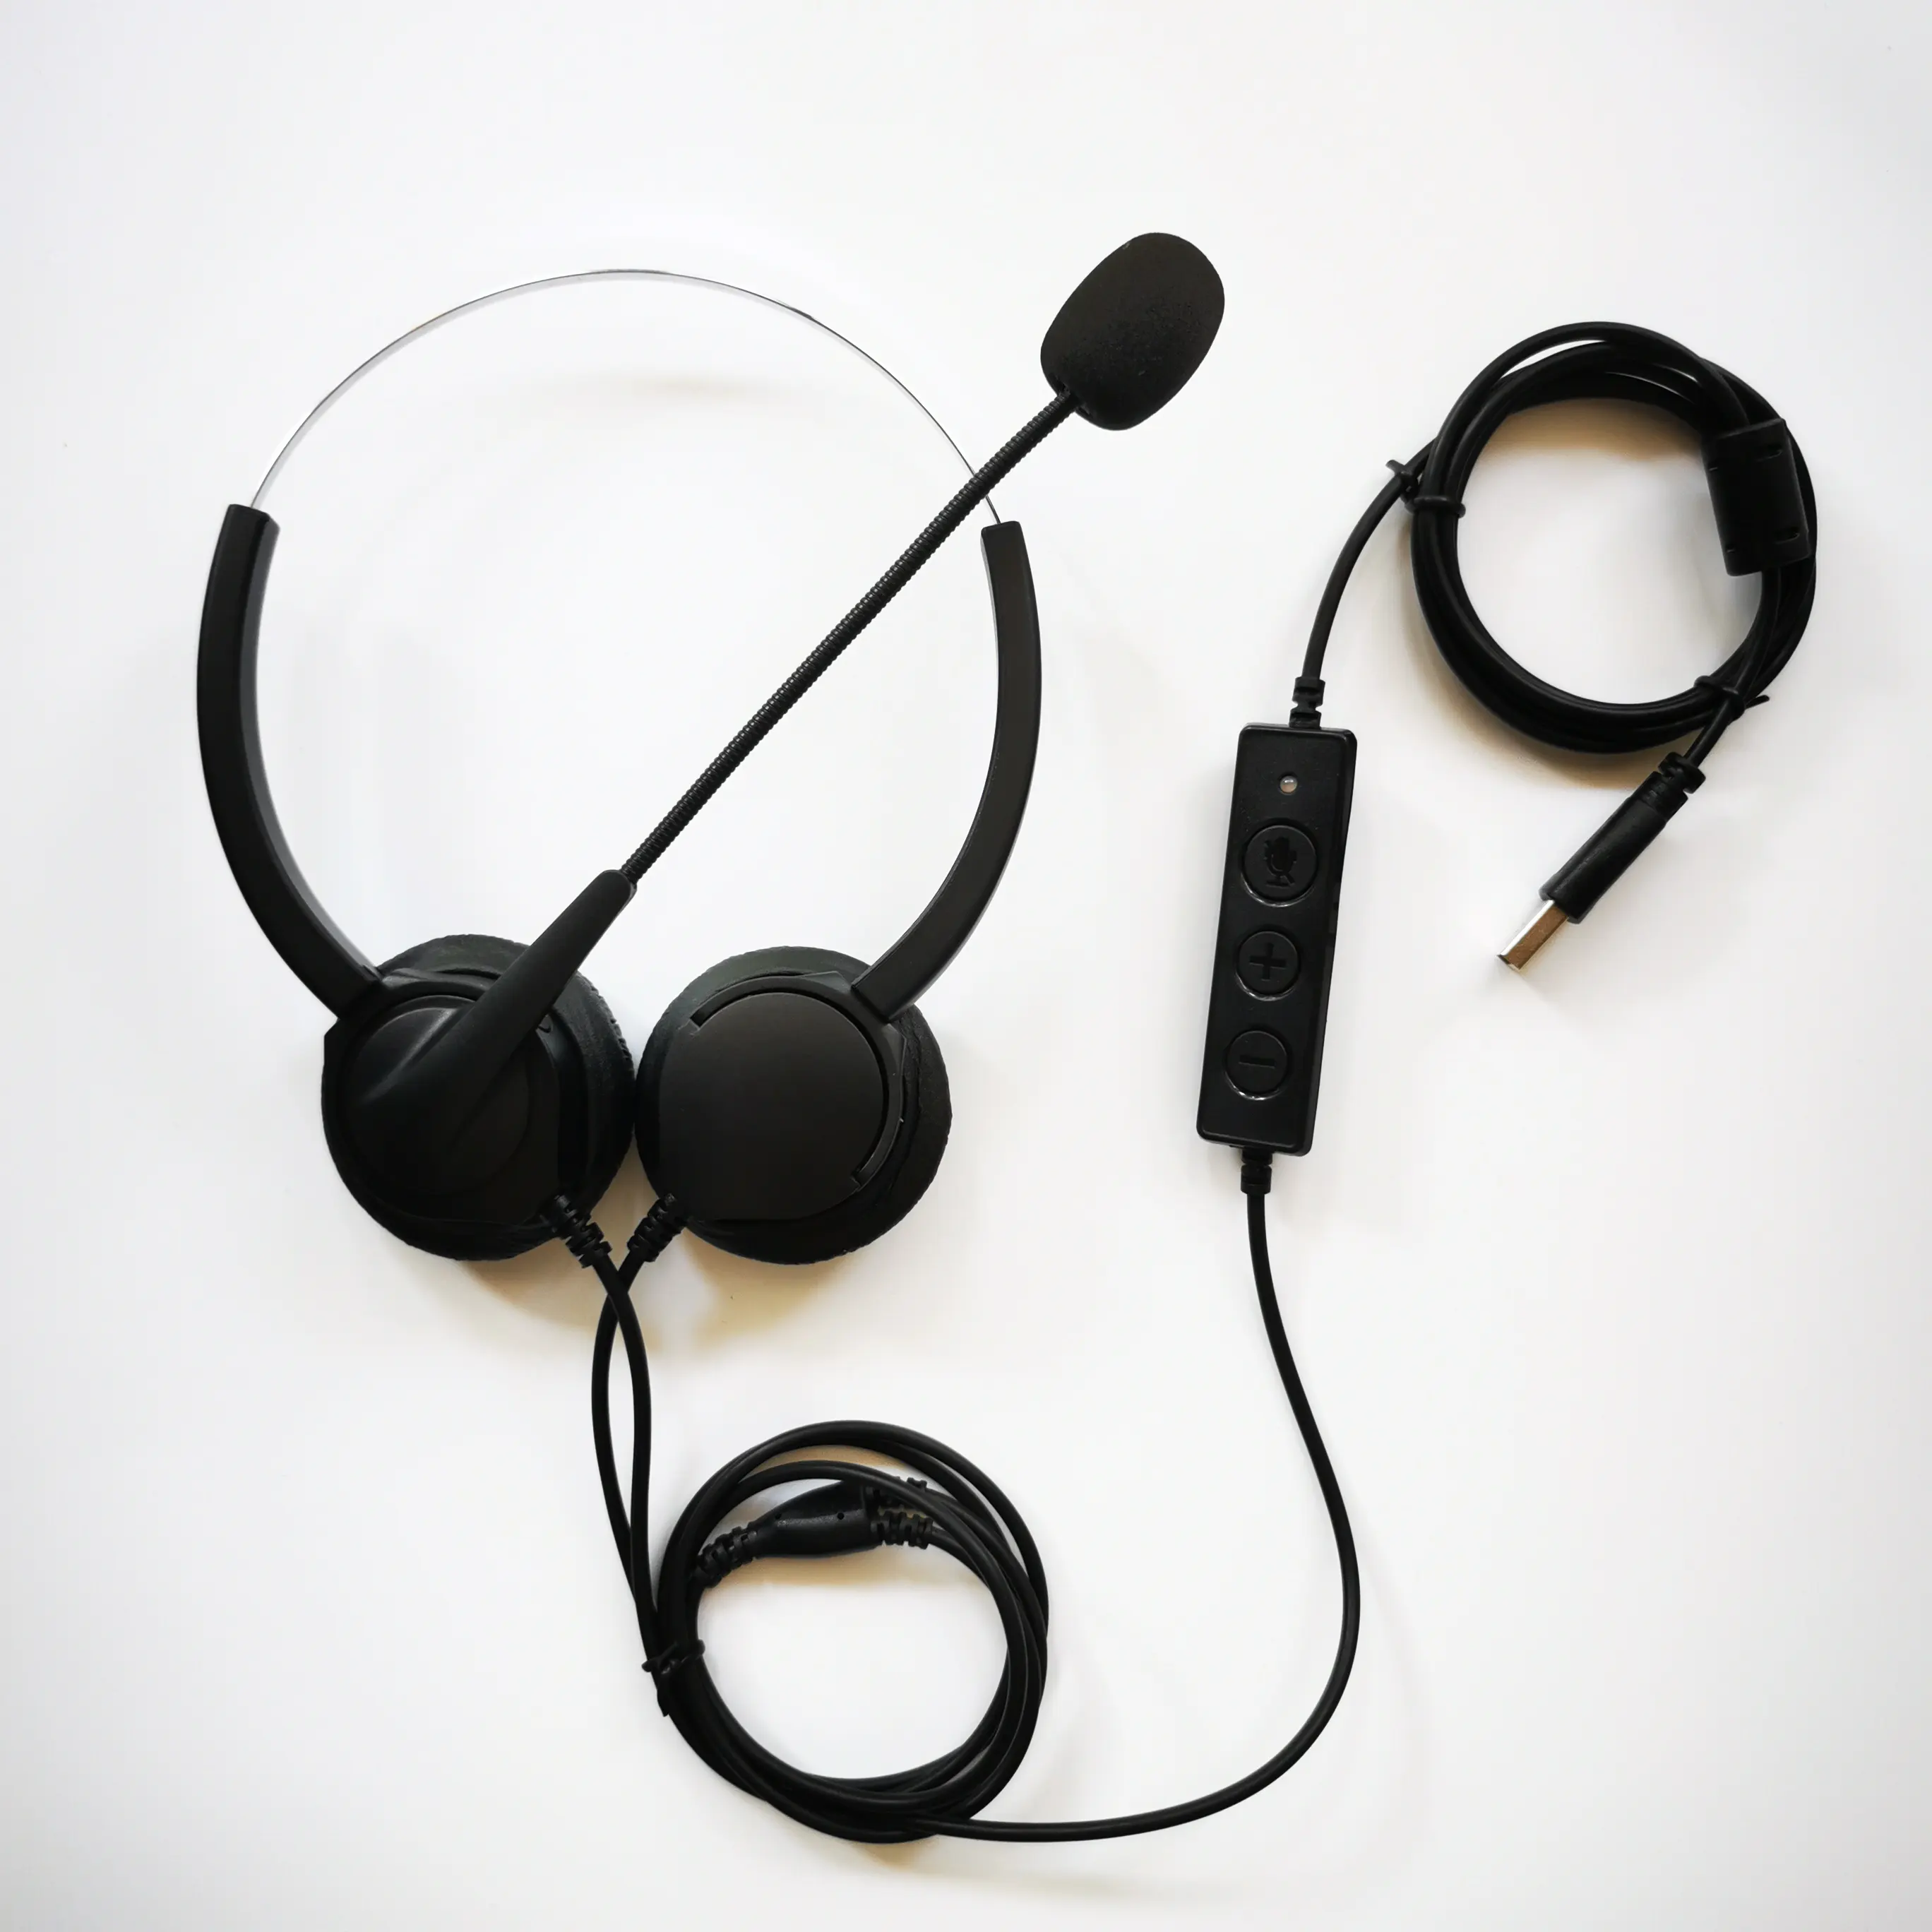 LL-83D-auriculares USB con micrófono y cancelación de ruido, para centro de llamadas, oficina, ordenador, reunión de negocios, Microsoft Team